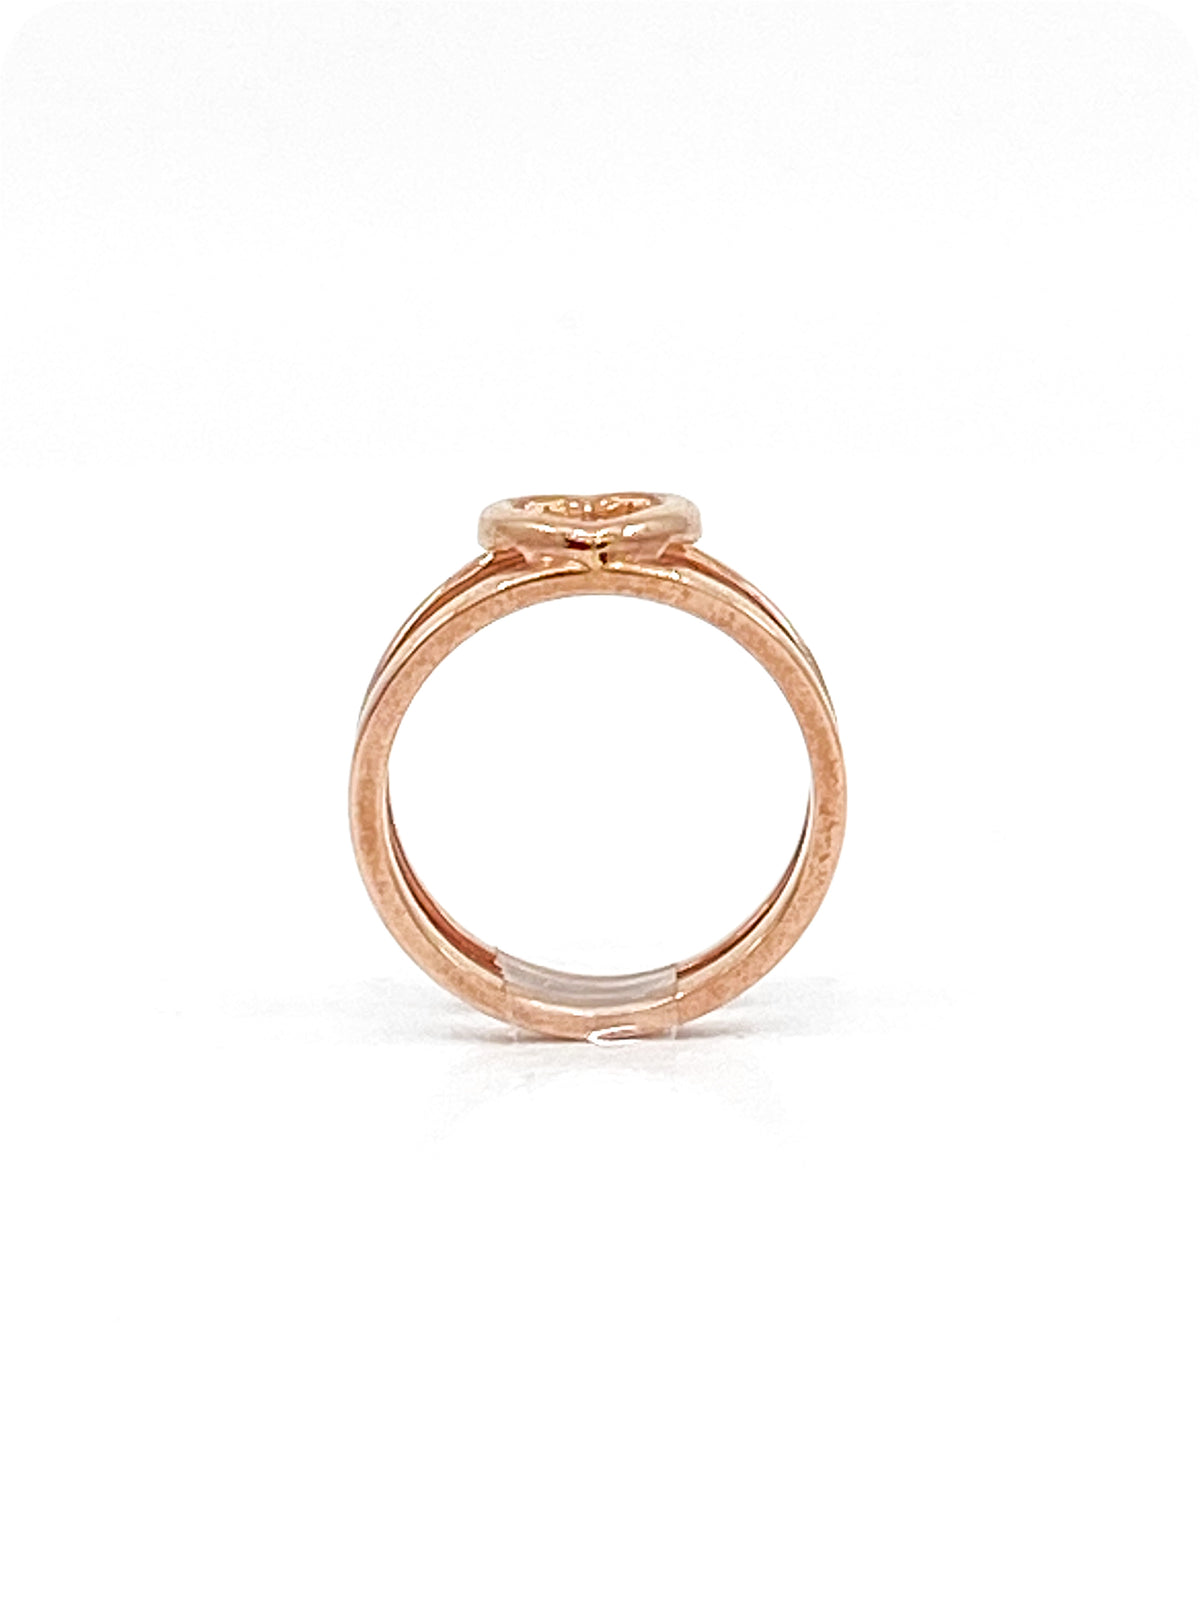 10K Rose Gold Heart Ring, size 6.5